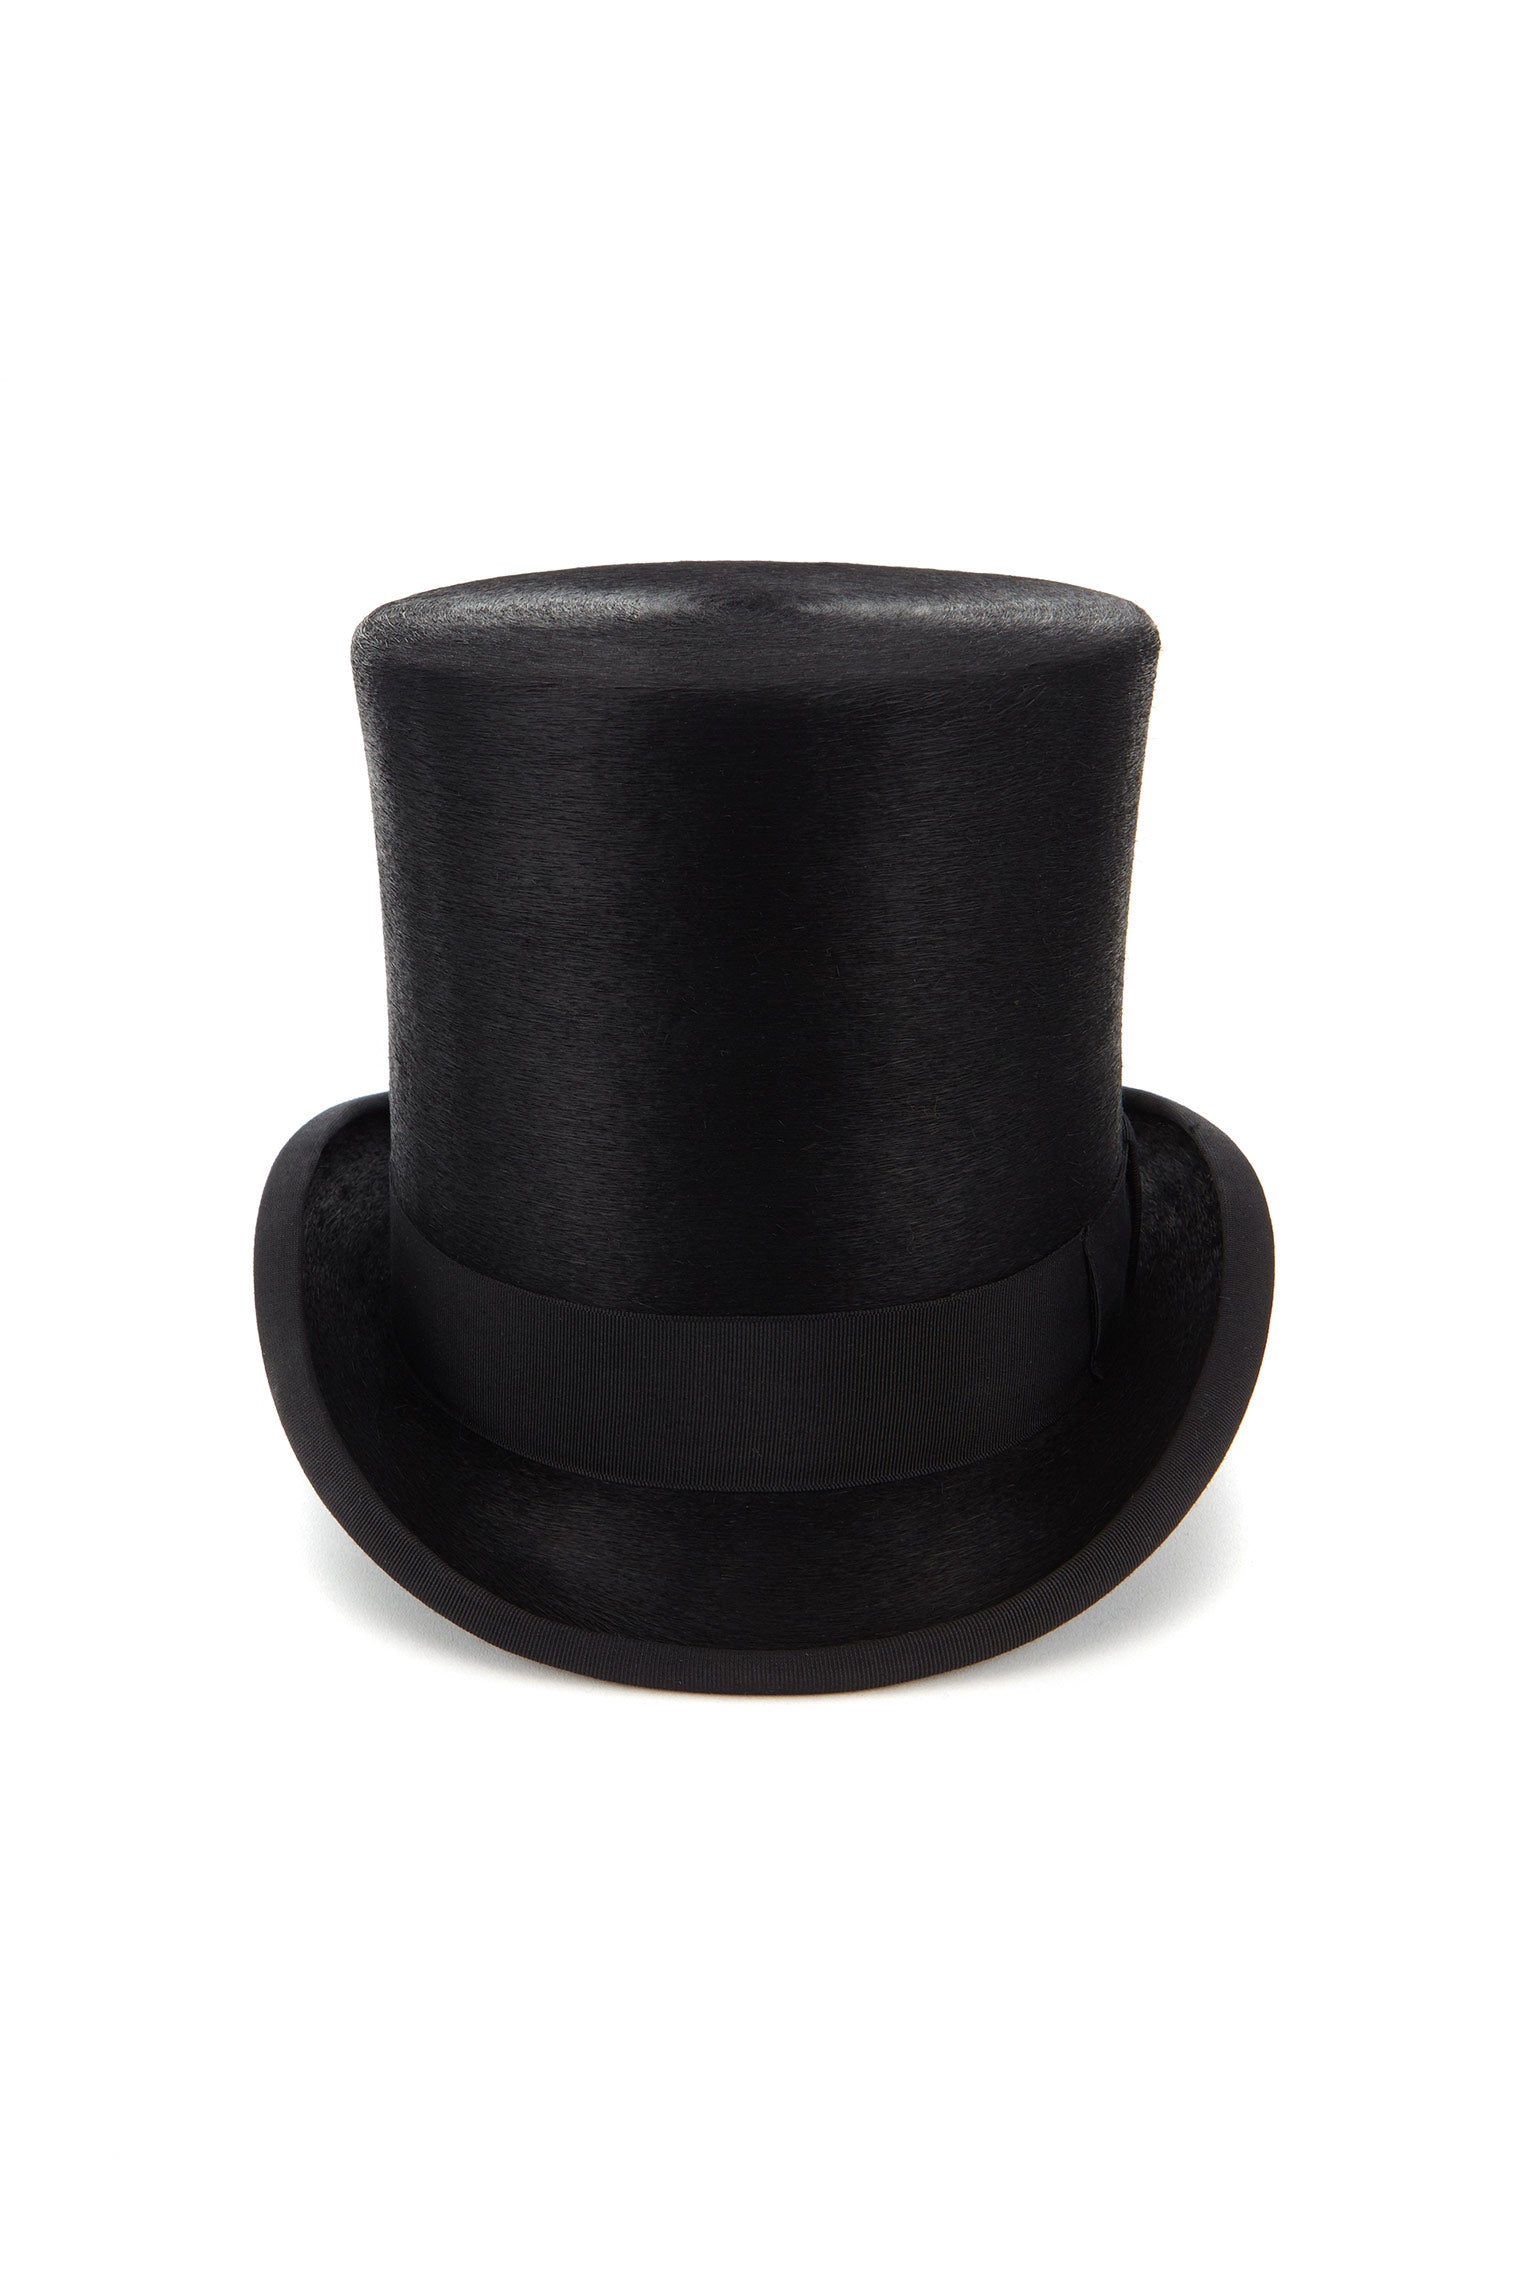 Westminster High Crown Top Hat - Men's Hats - Lock & Co. Hatters London UK